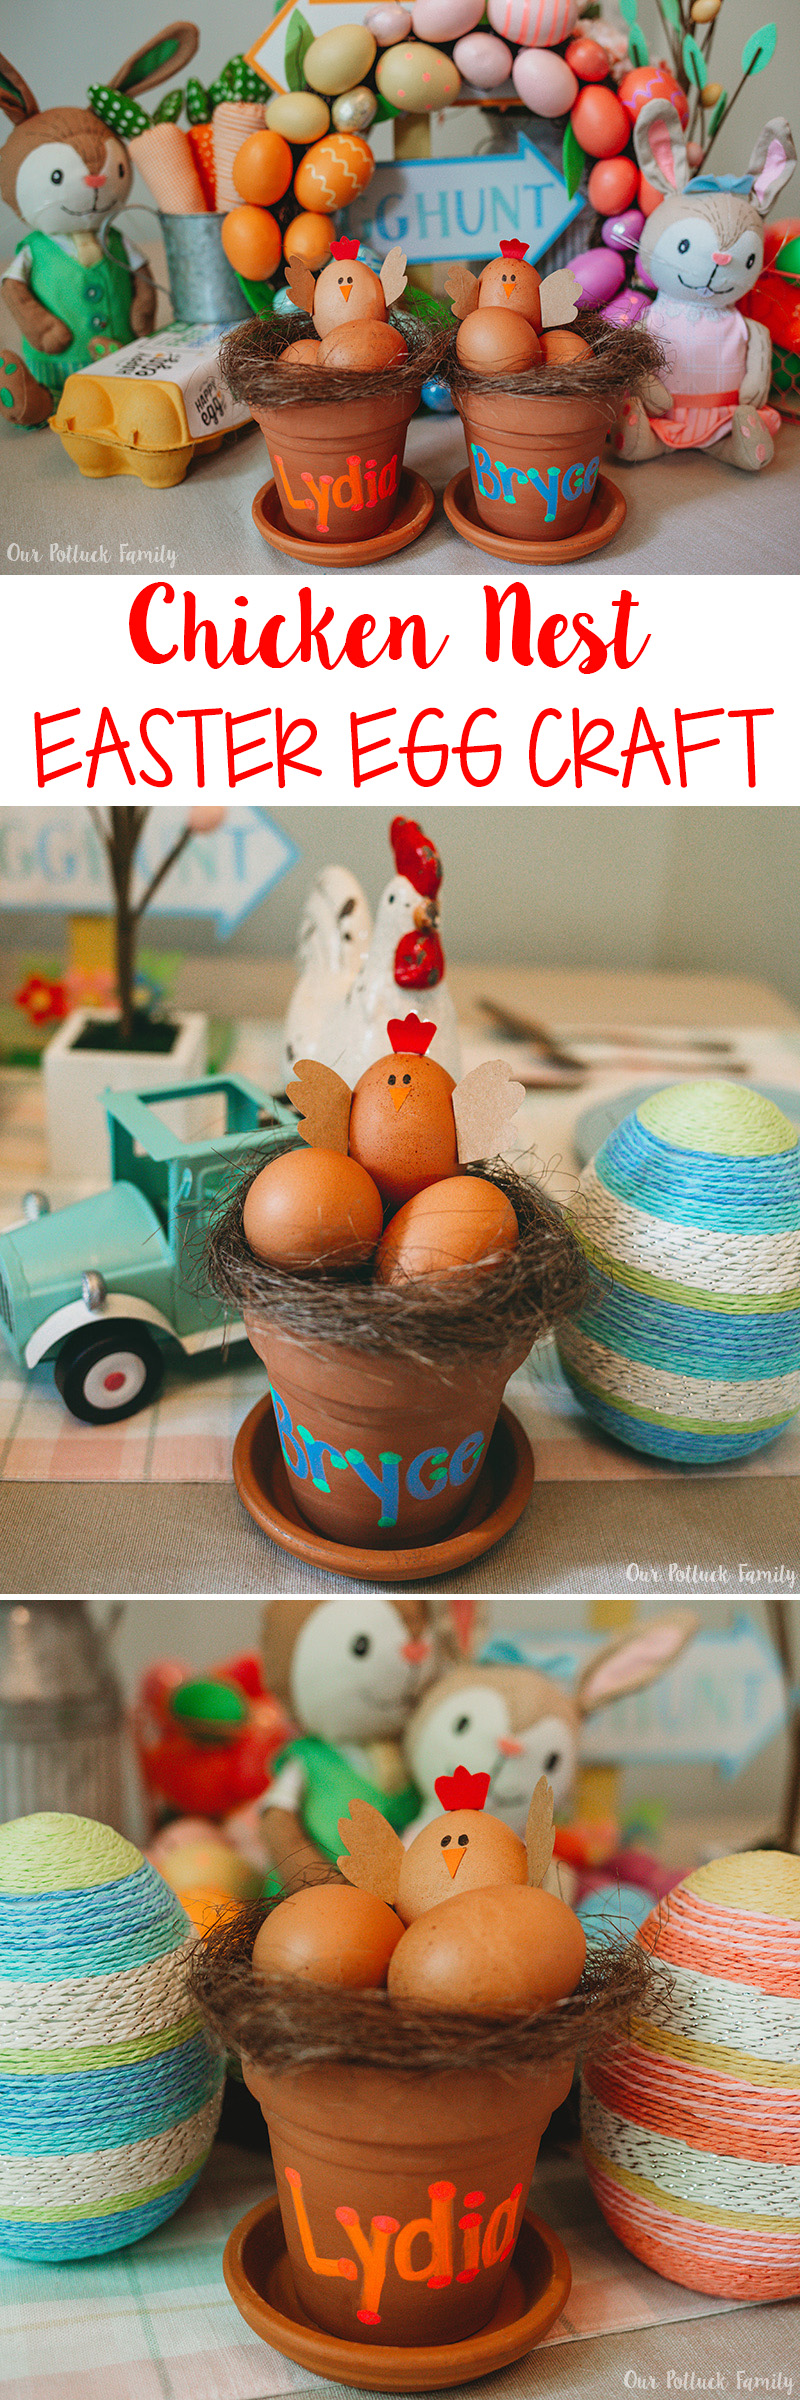 Chicken Nest Easter Egg Craft